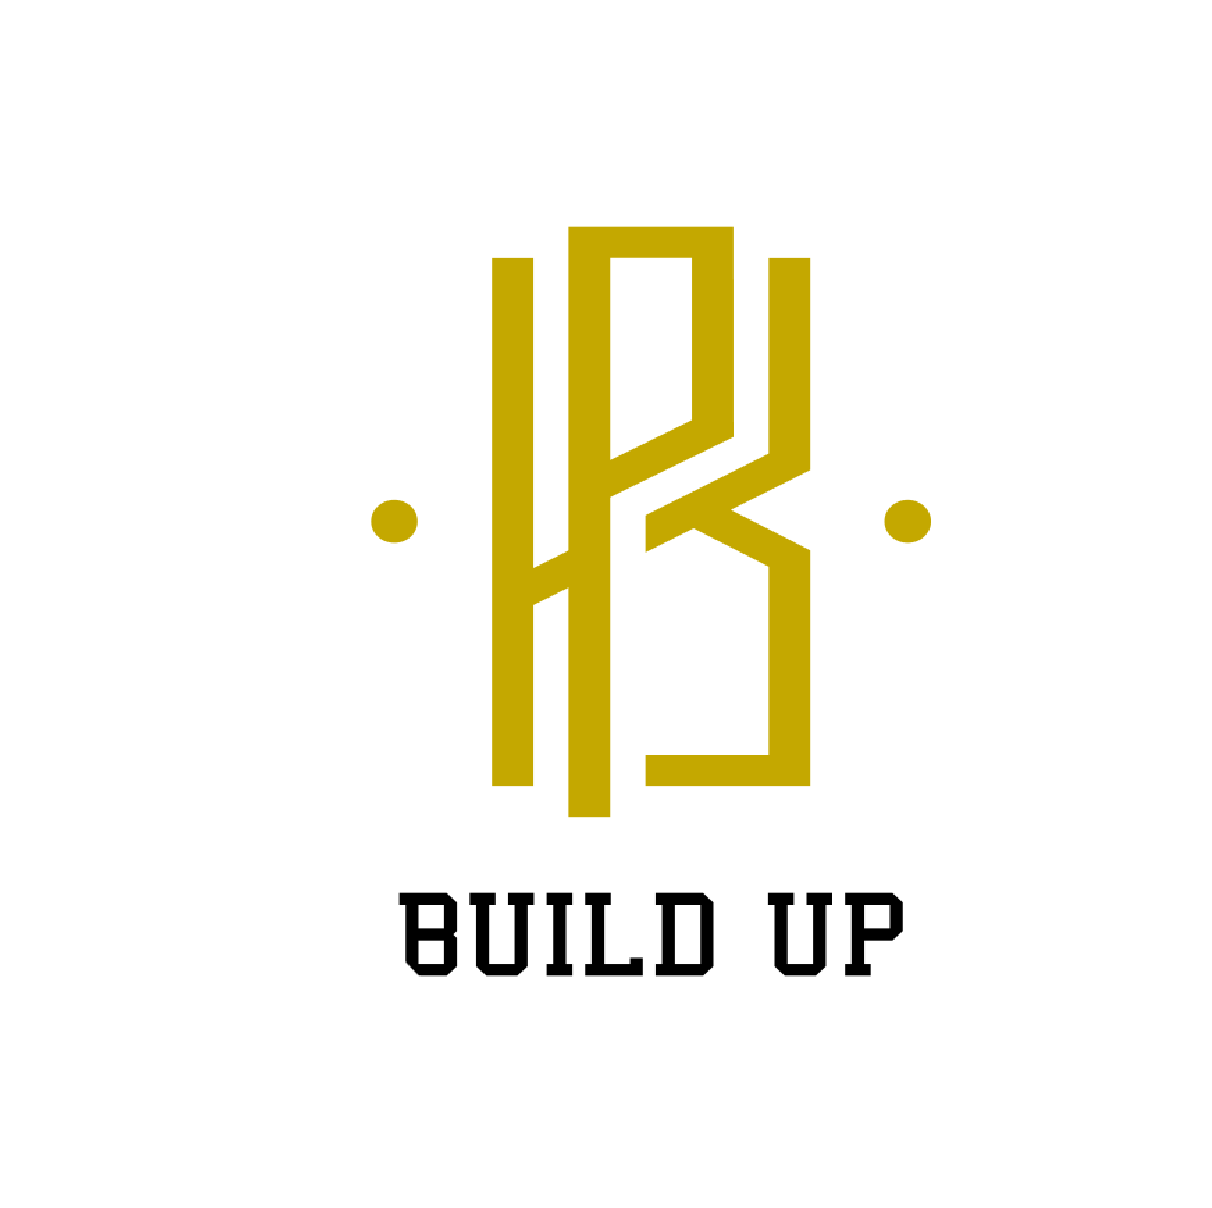 Buildup for Construction